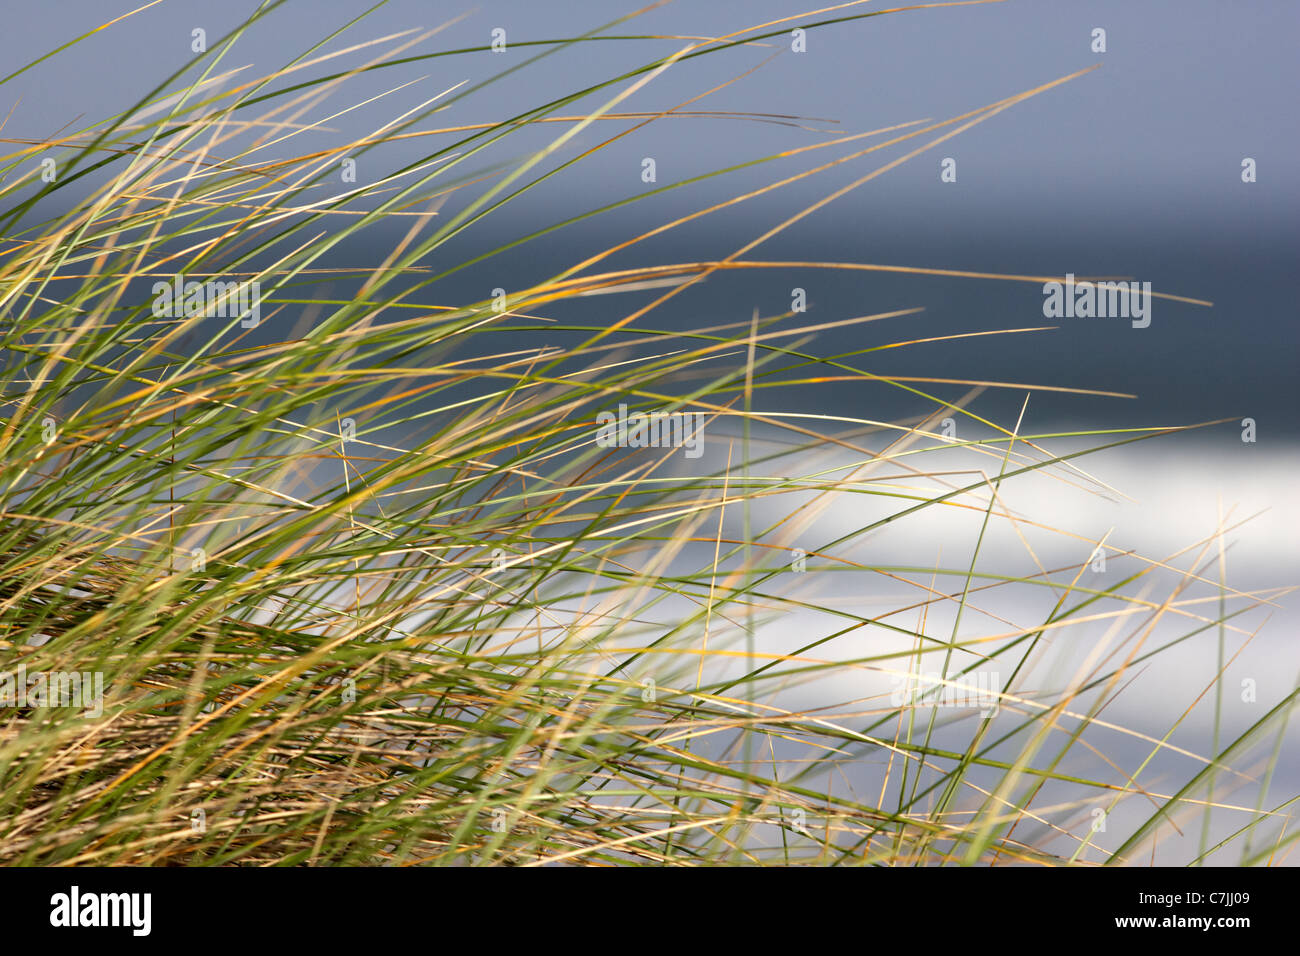 marram grass on sand dunes on beach county derry londonderry northern ireland uk Stock Photo